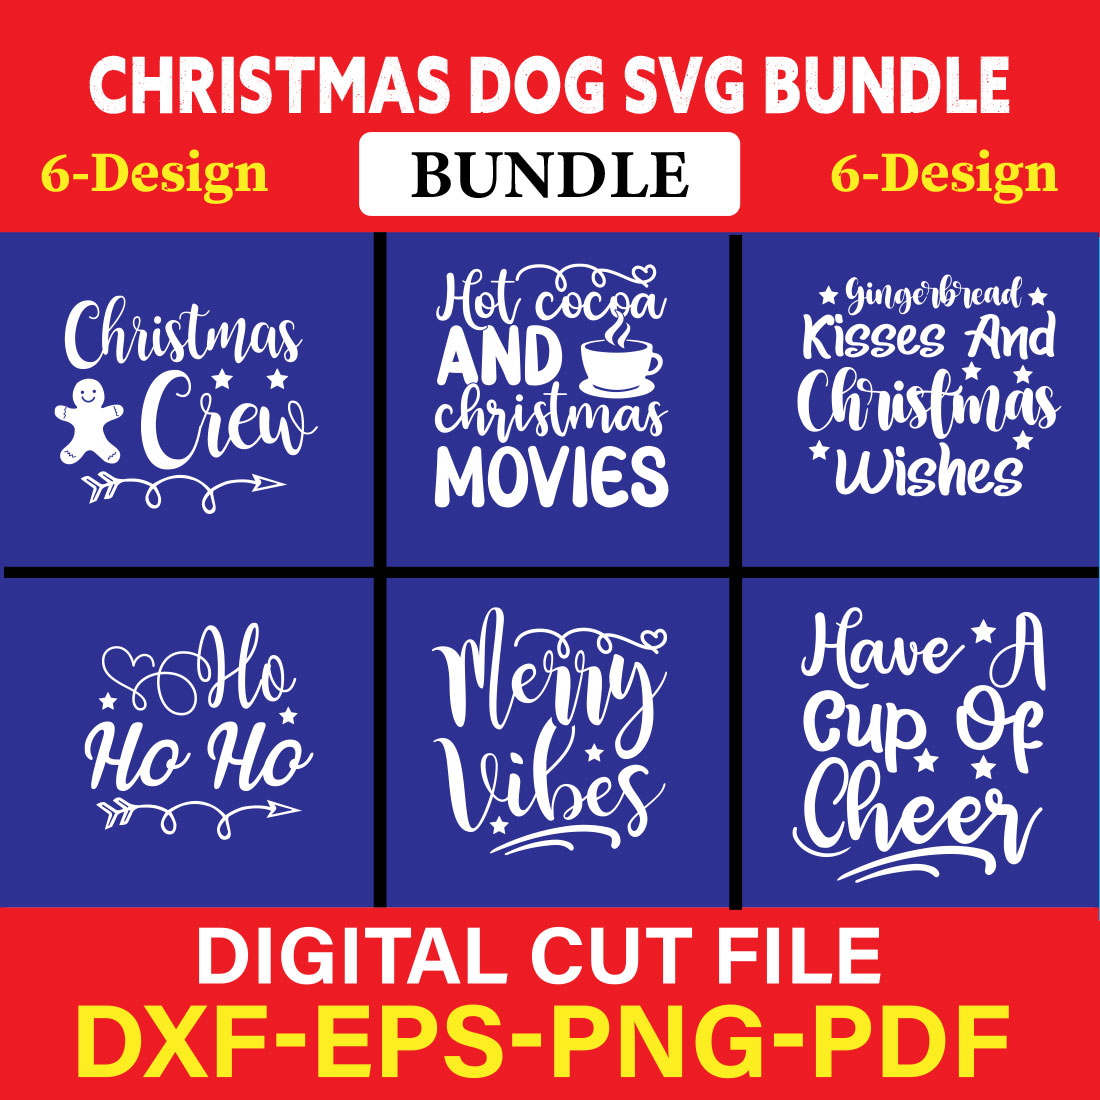 Christmas SVG Bundle / Funny Christmas SVG / Cut File vol-07 cover image.